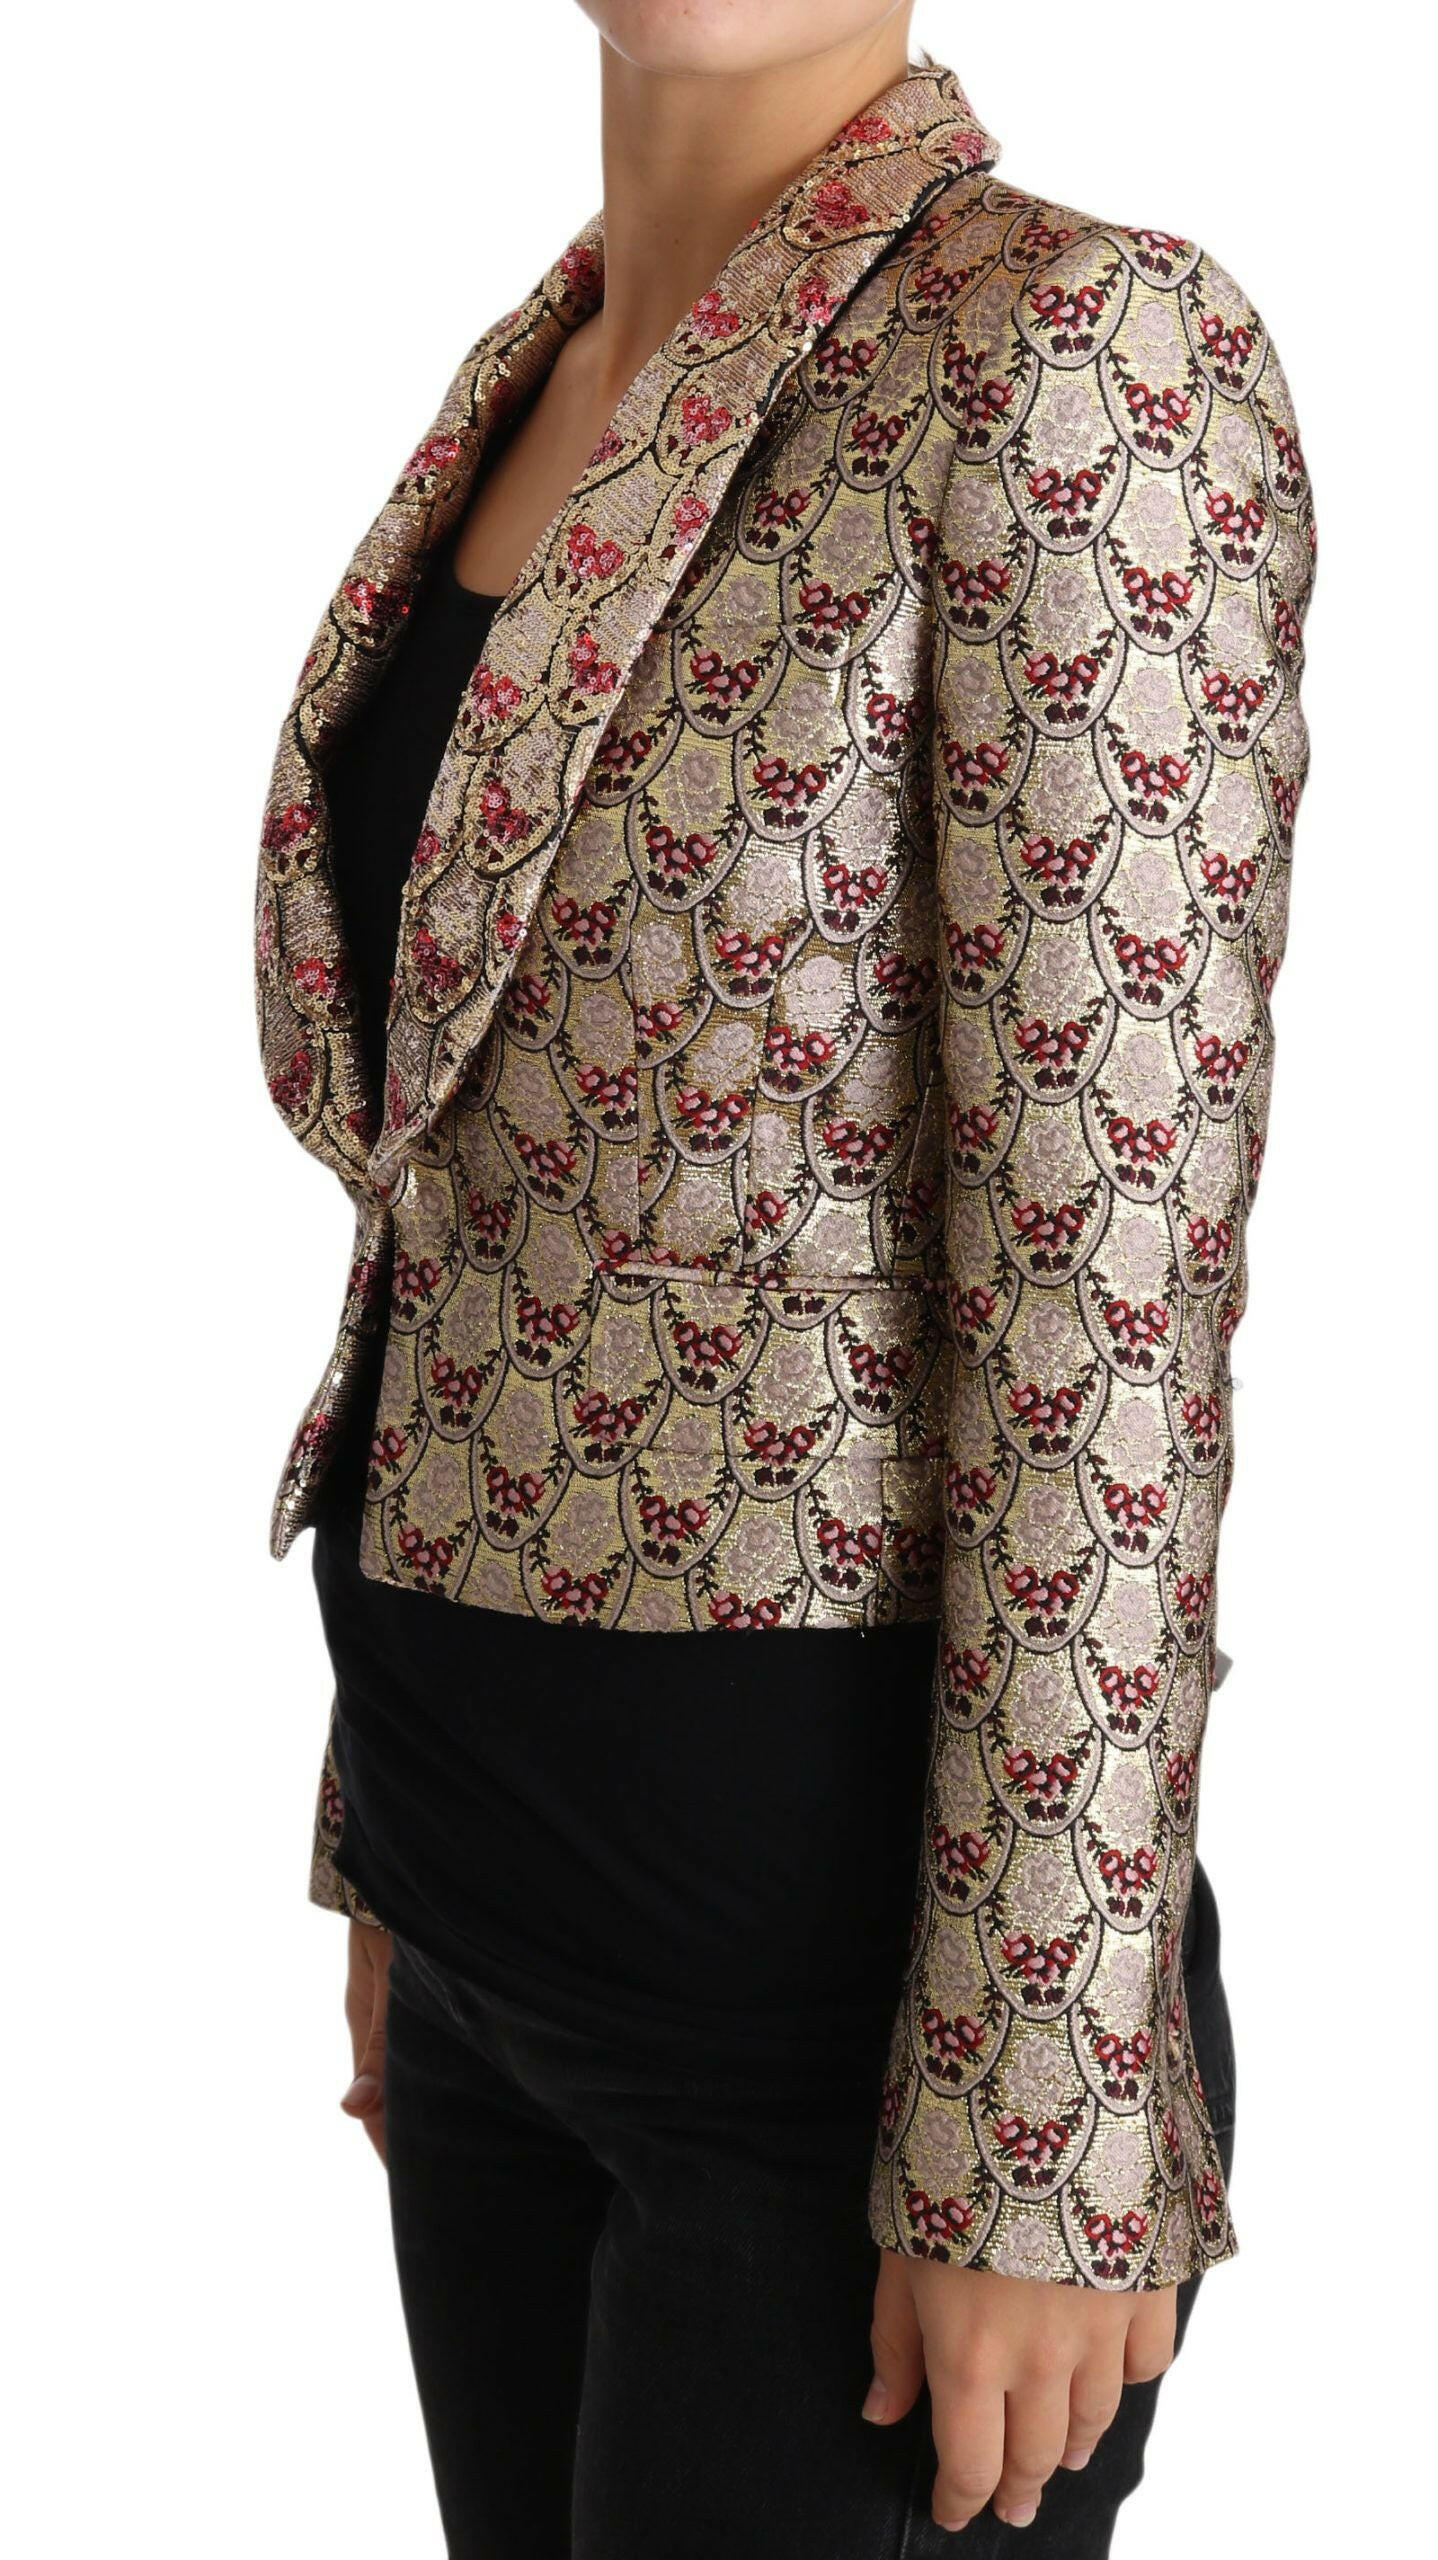 Dolce & Gabbana Gold Floral Sequined Blazer Coat Jacket - GENUINE AUTHENTIC BRAND LLC  